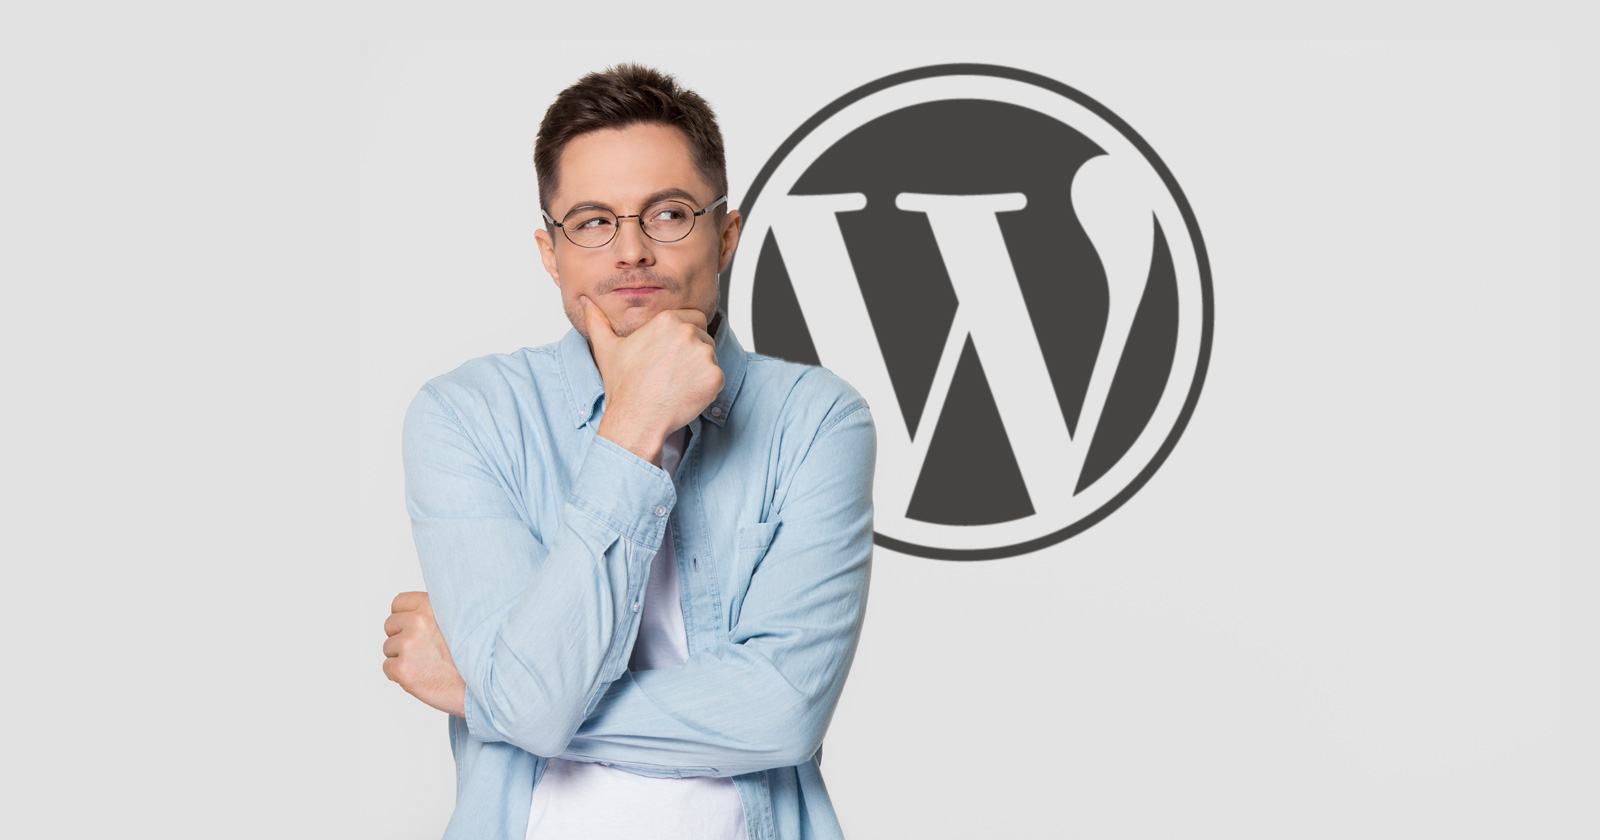 Yoast SEO Founder: WordPress Admin Interface Is “Simply Bad”